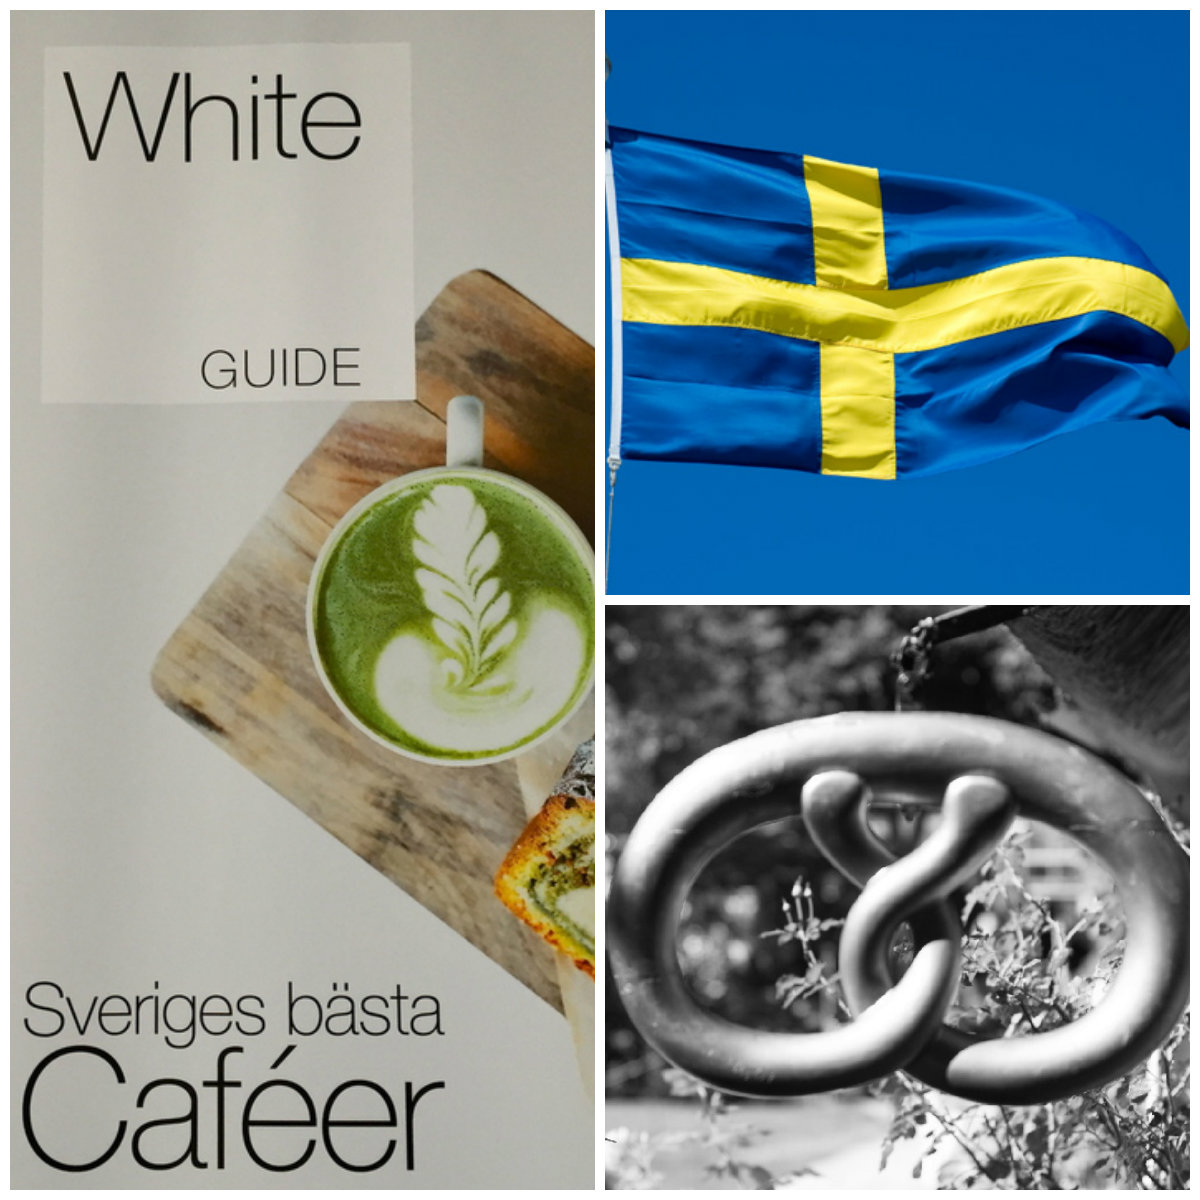 White Guide Café 2016/17 – Caféer per landskap